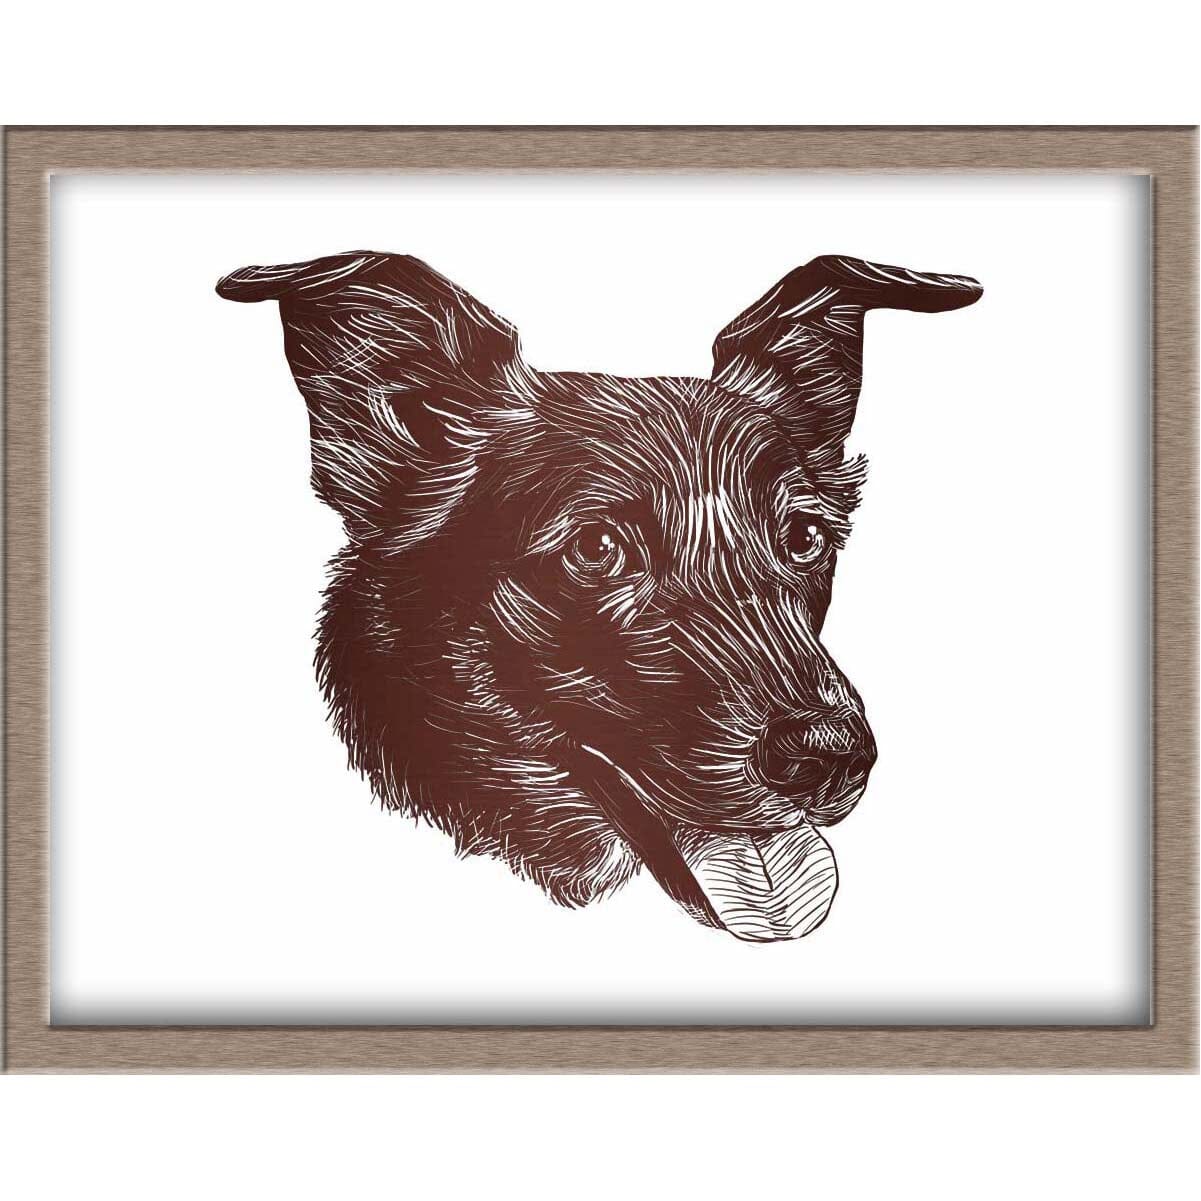 Cute Black Dog Foiled Print (Shadow) Posters, Prints, & Visual Artwork JoyousJoyfulJoyness 